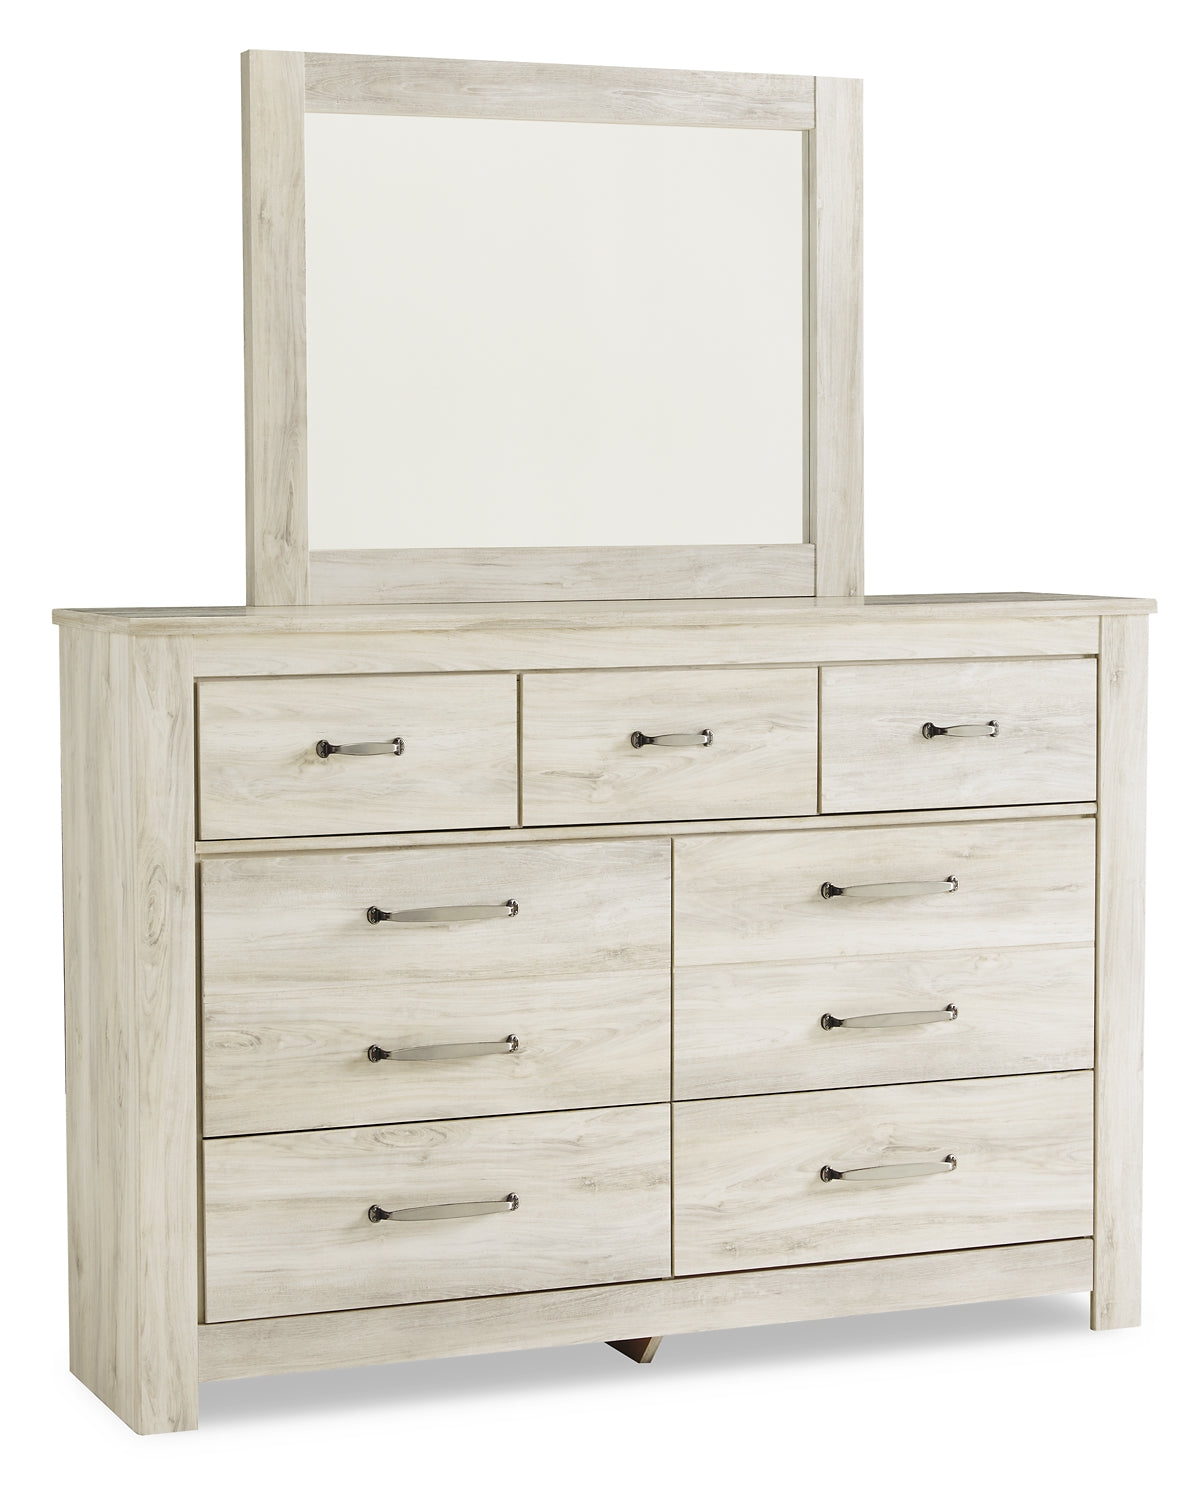 Bellaby Queen Panel Headboard with Mirrored Dresser and 2 Nightstands